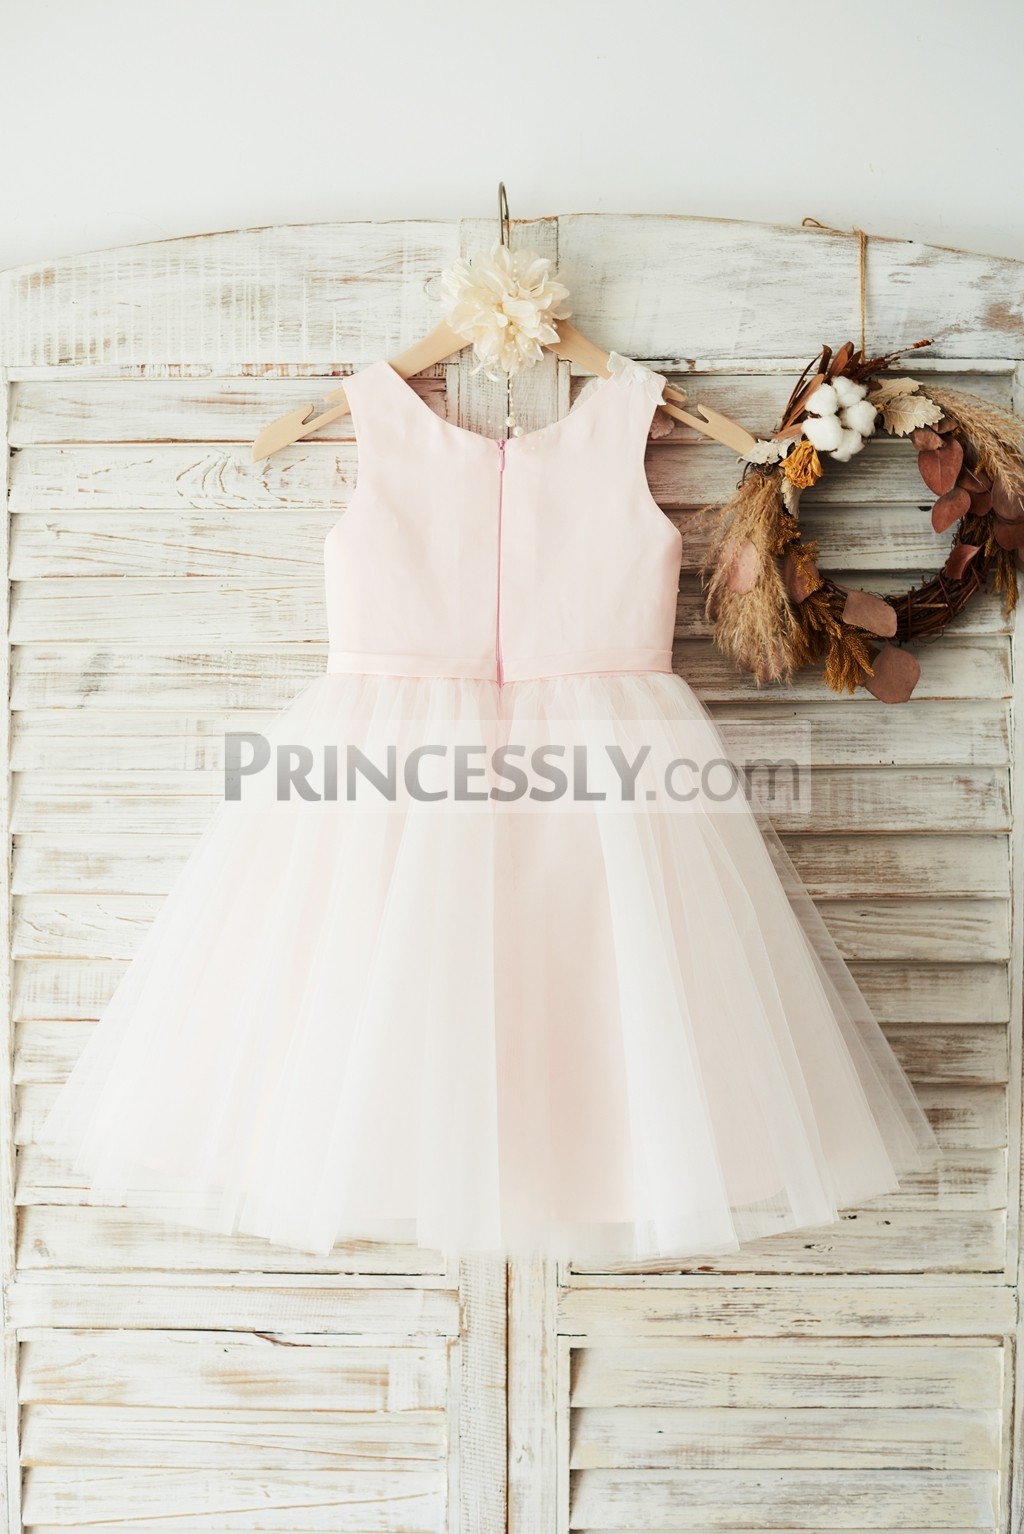 Scoop neck sleeveless pink wedding little girl dress